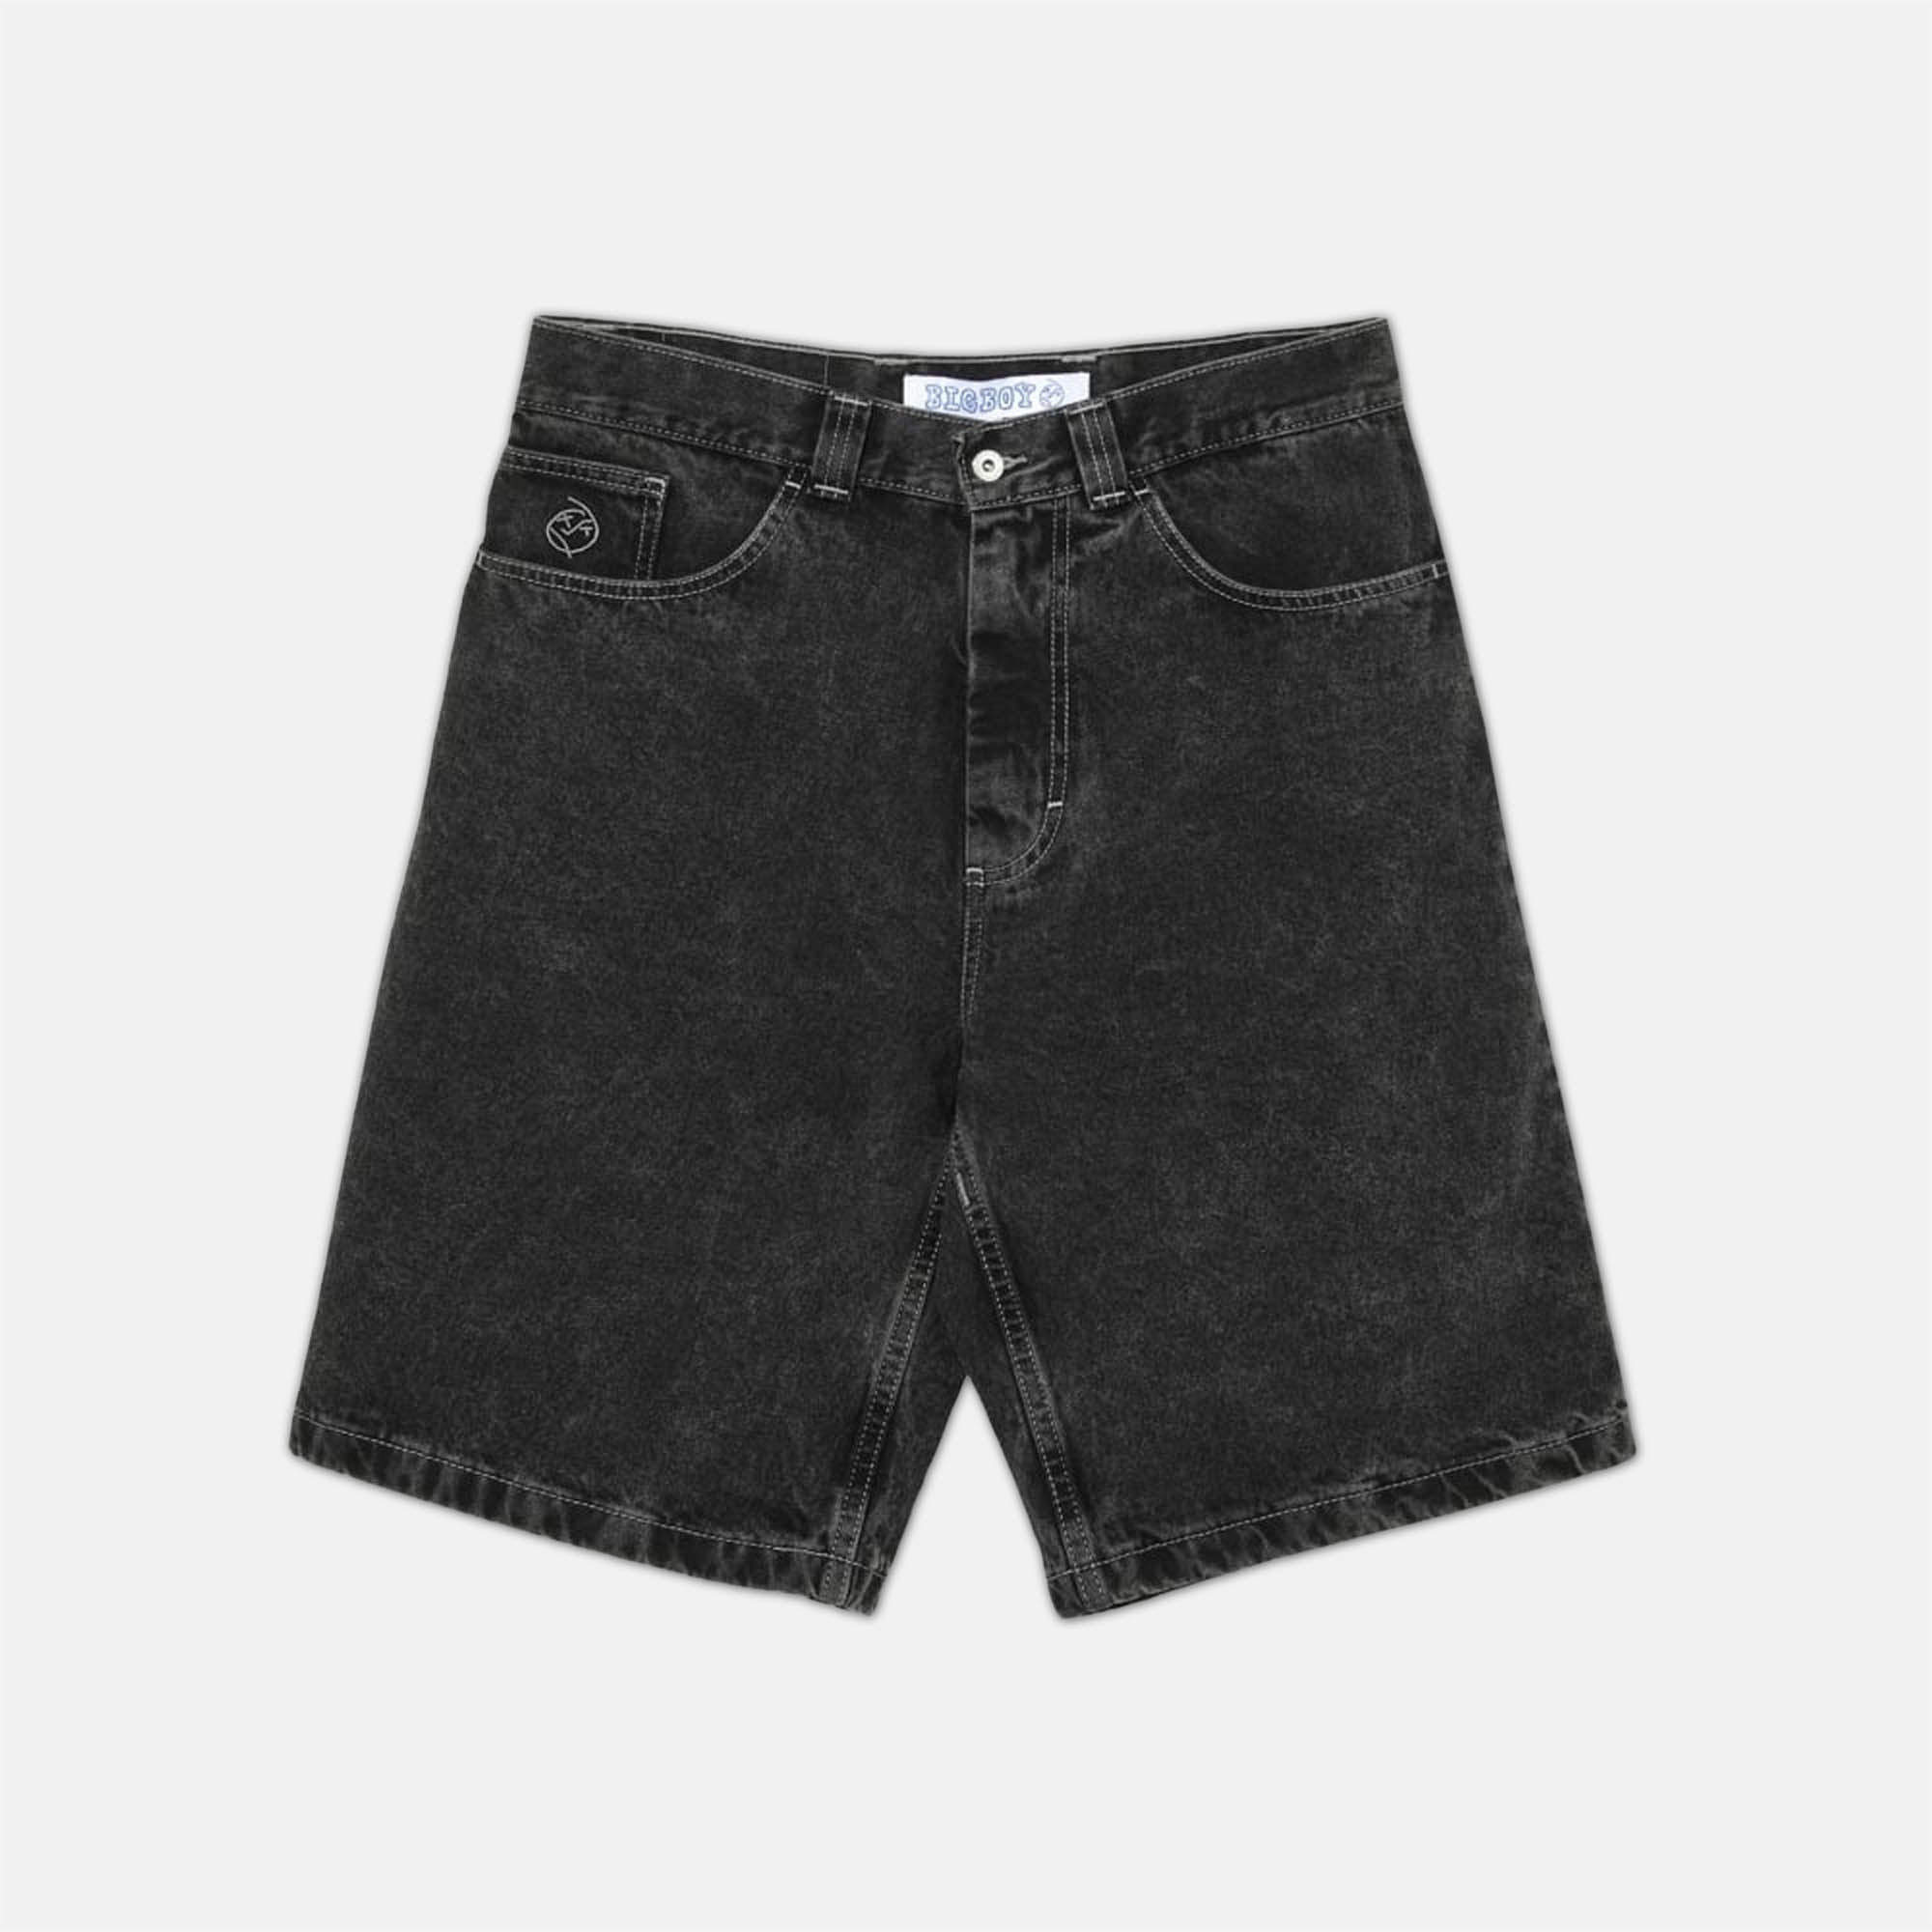 Polar Skate Co. - Big Boy Denim Shorts - Silver Black XXX Small